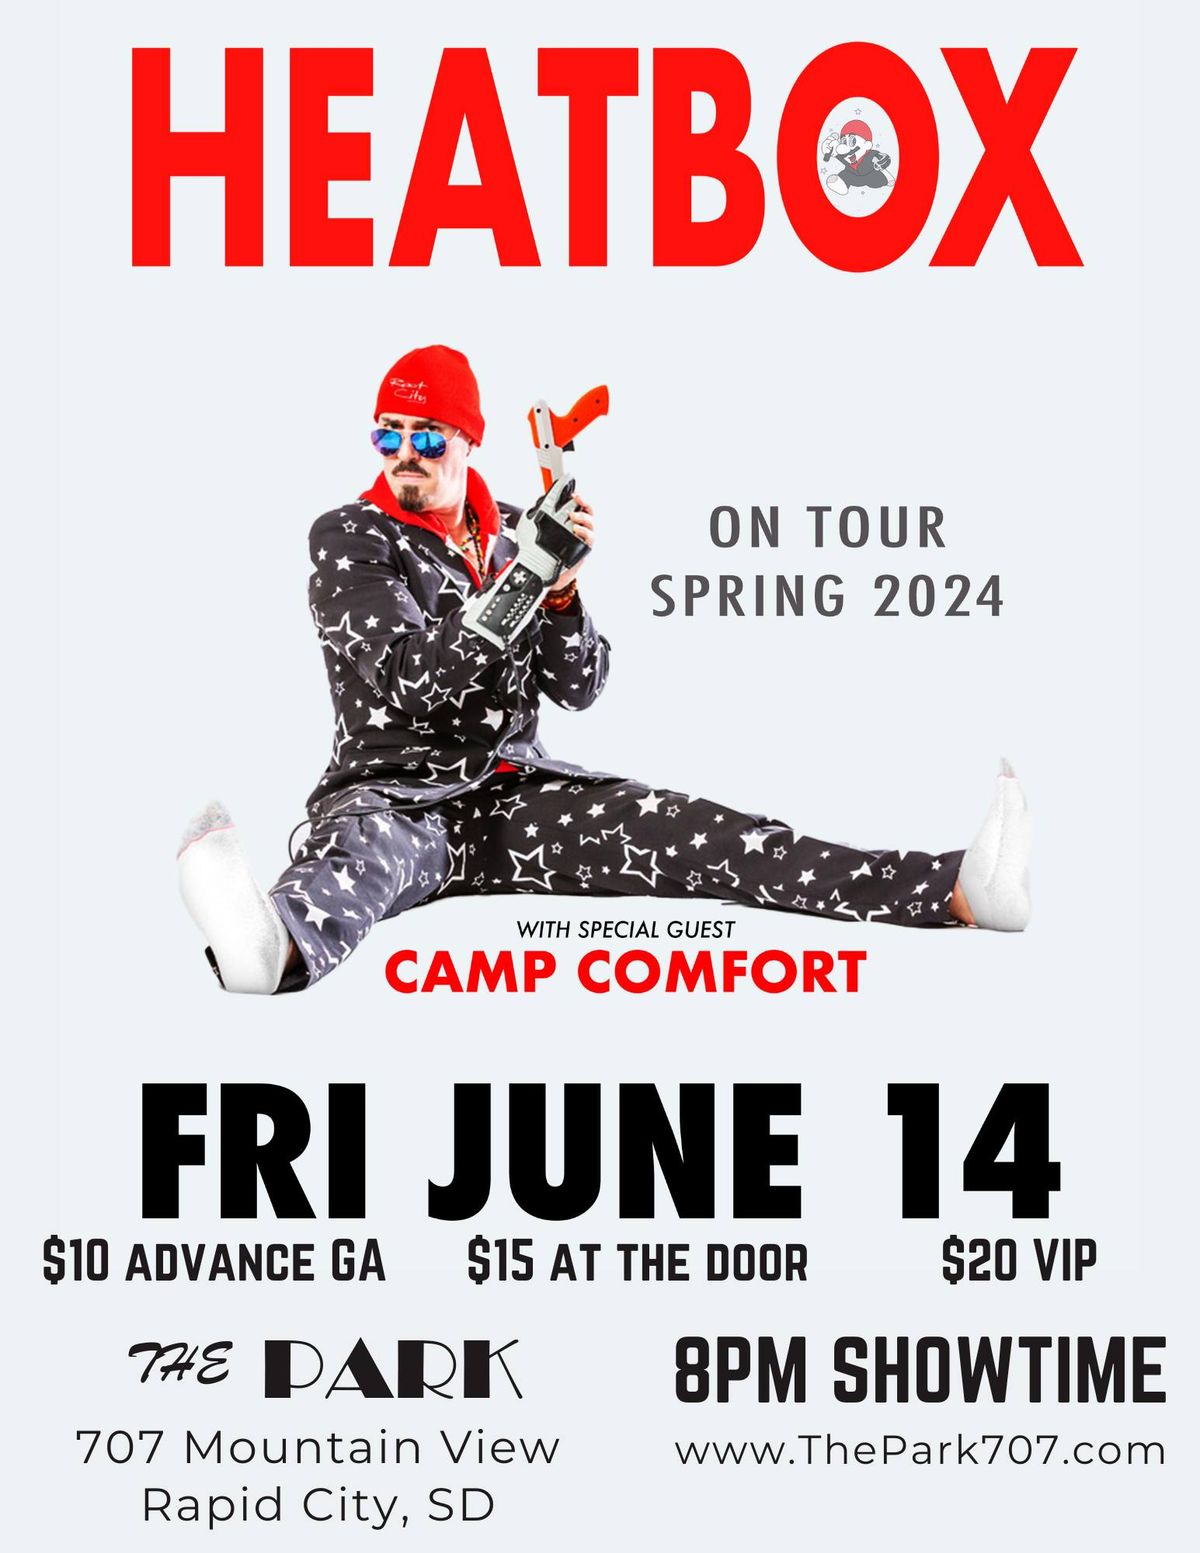 Heatbox & Camp Comfort Return to The Park!